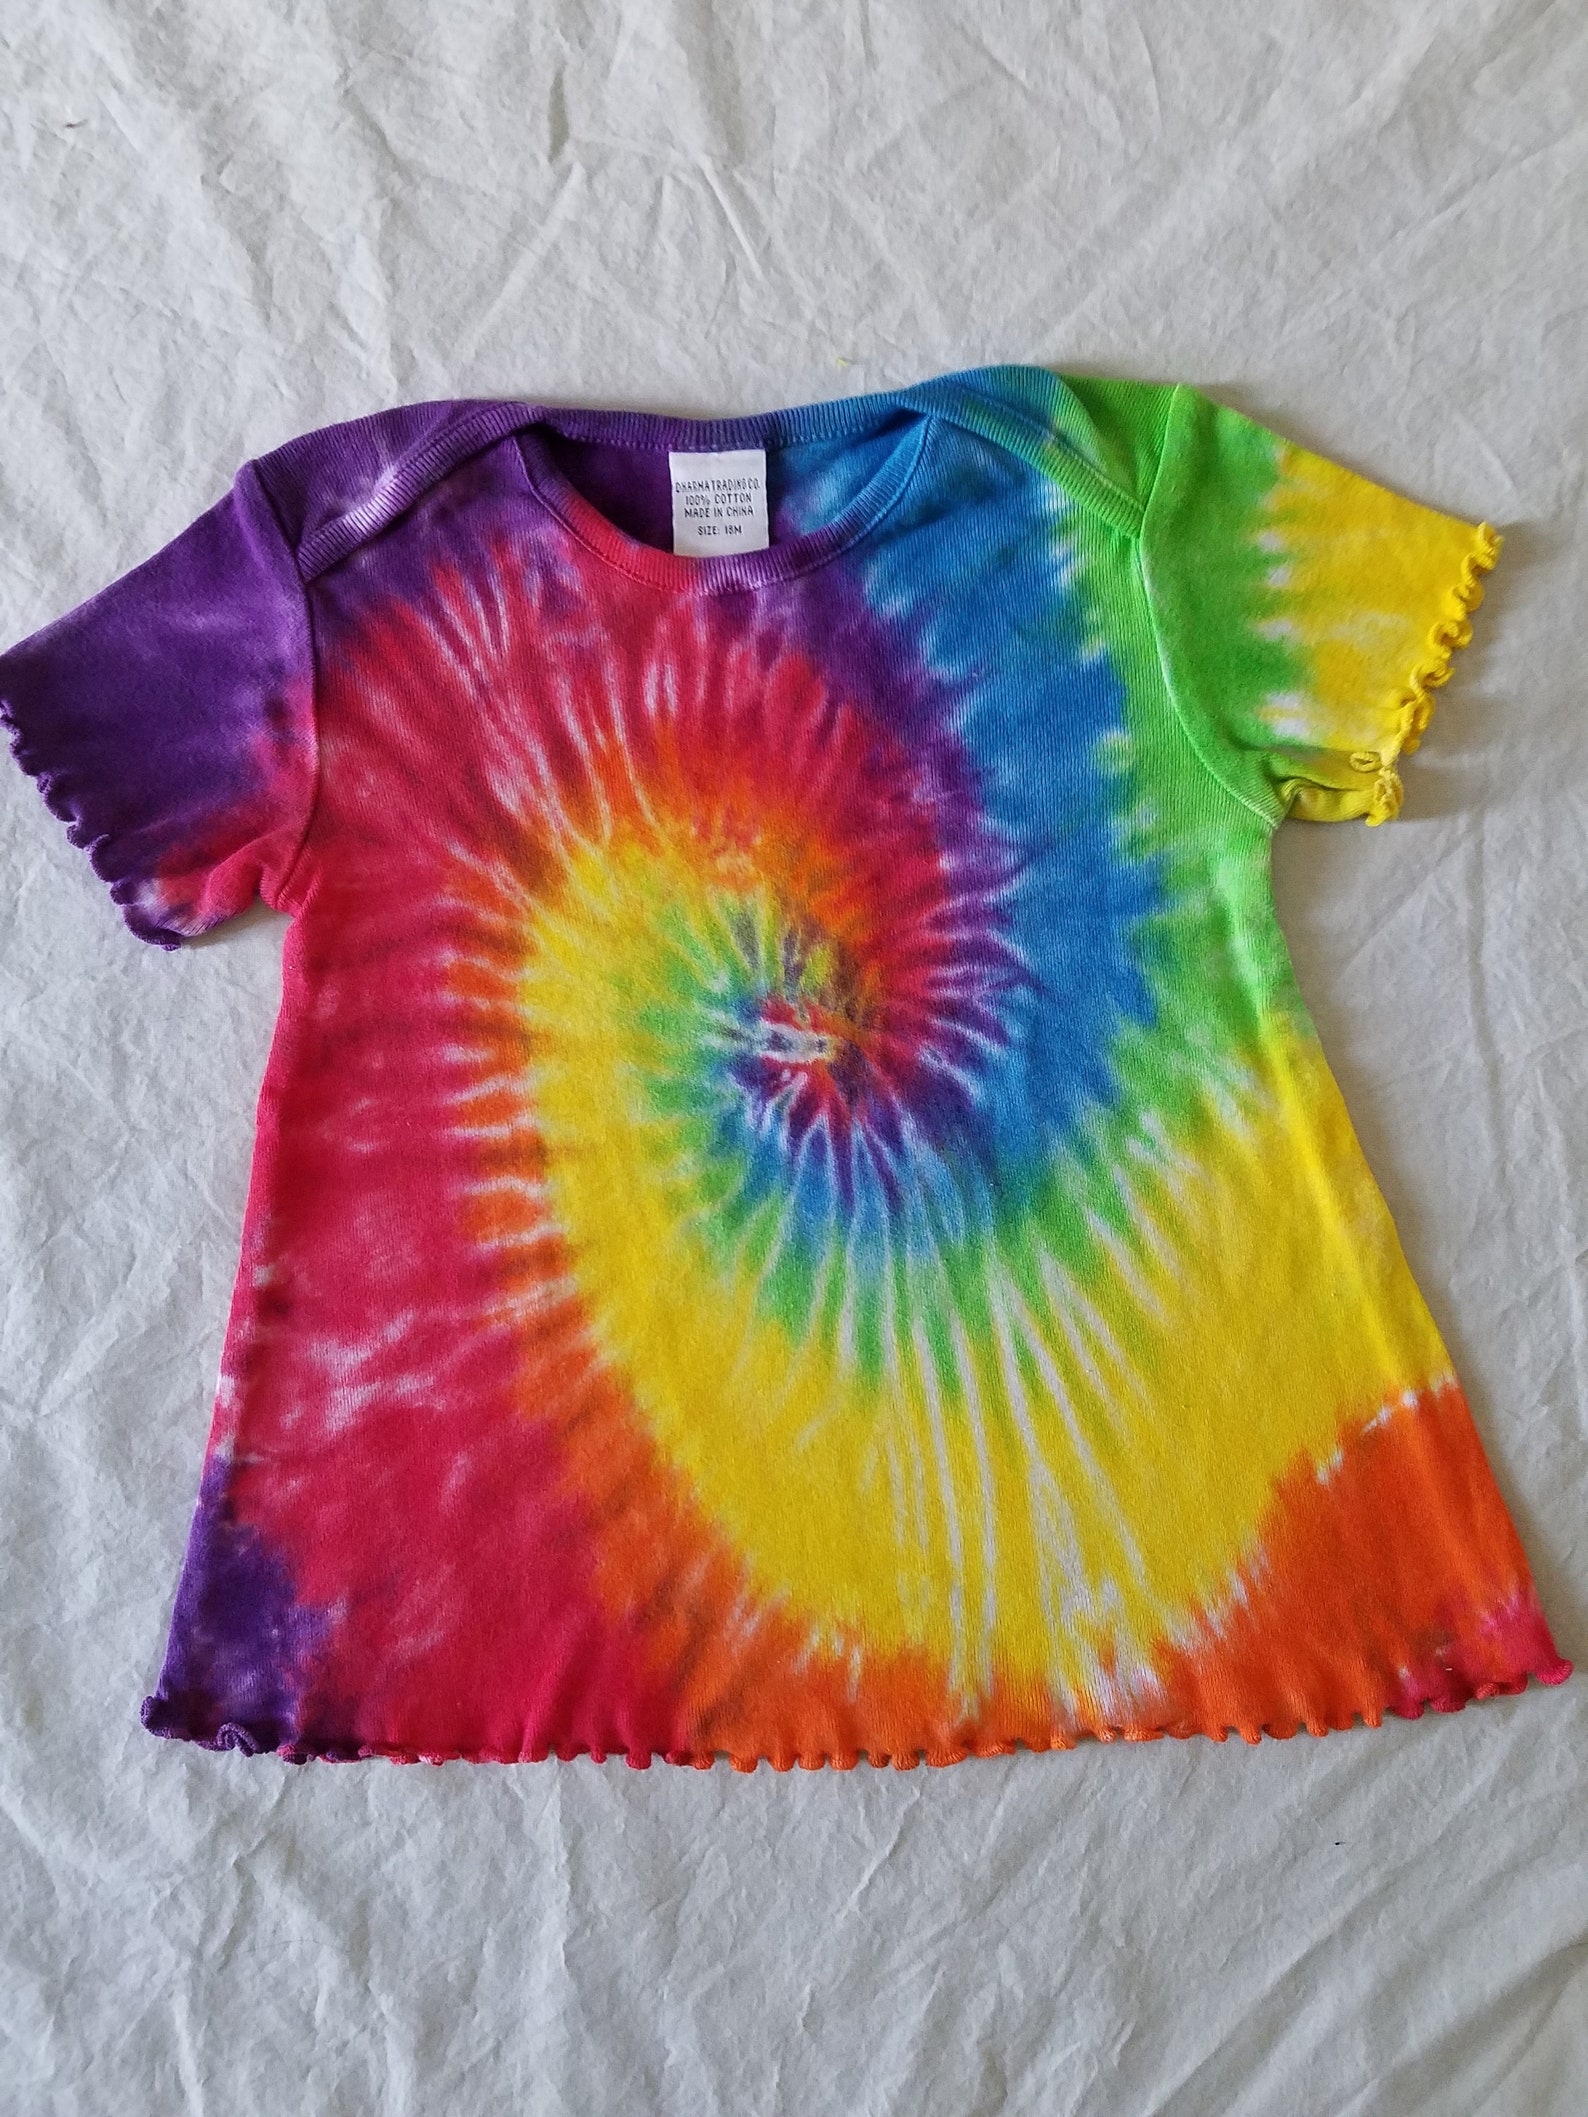 Rainbow dress infant dress tie dye dress hippie stuff | Etsy